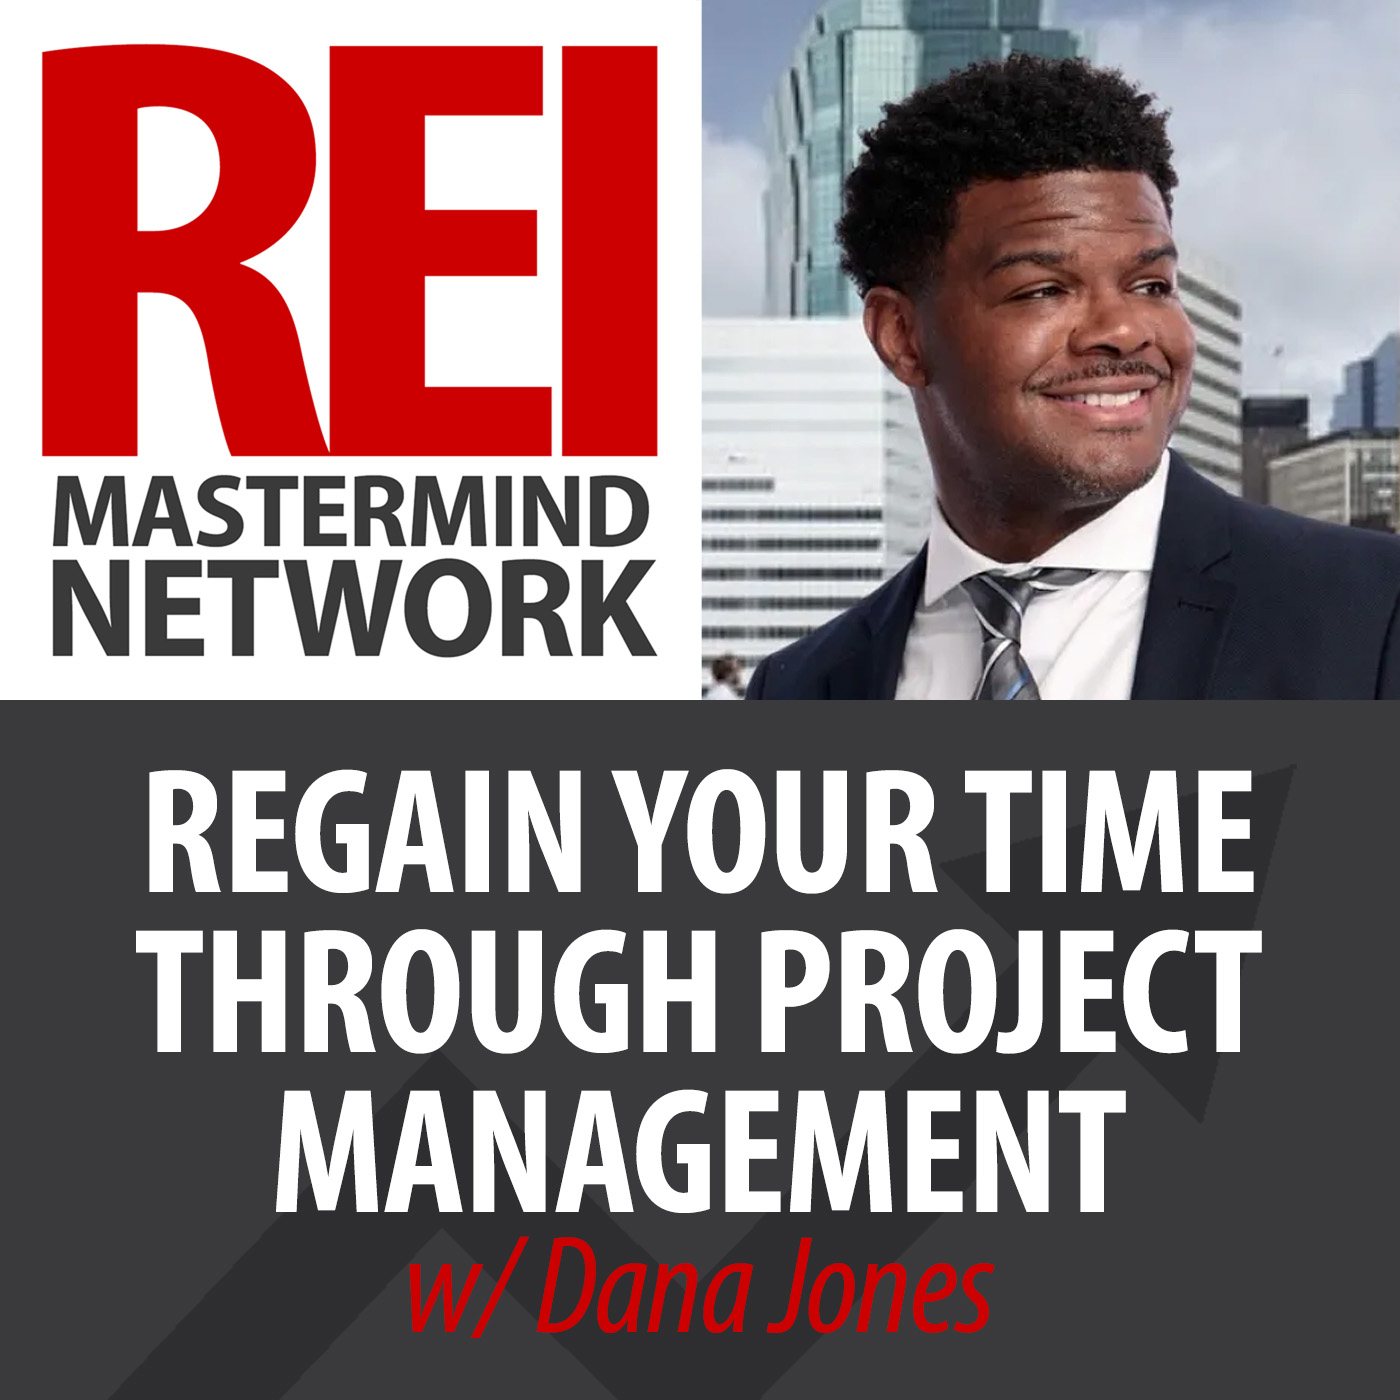 Regain Your Time Through Project Management with Dana Jones Image